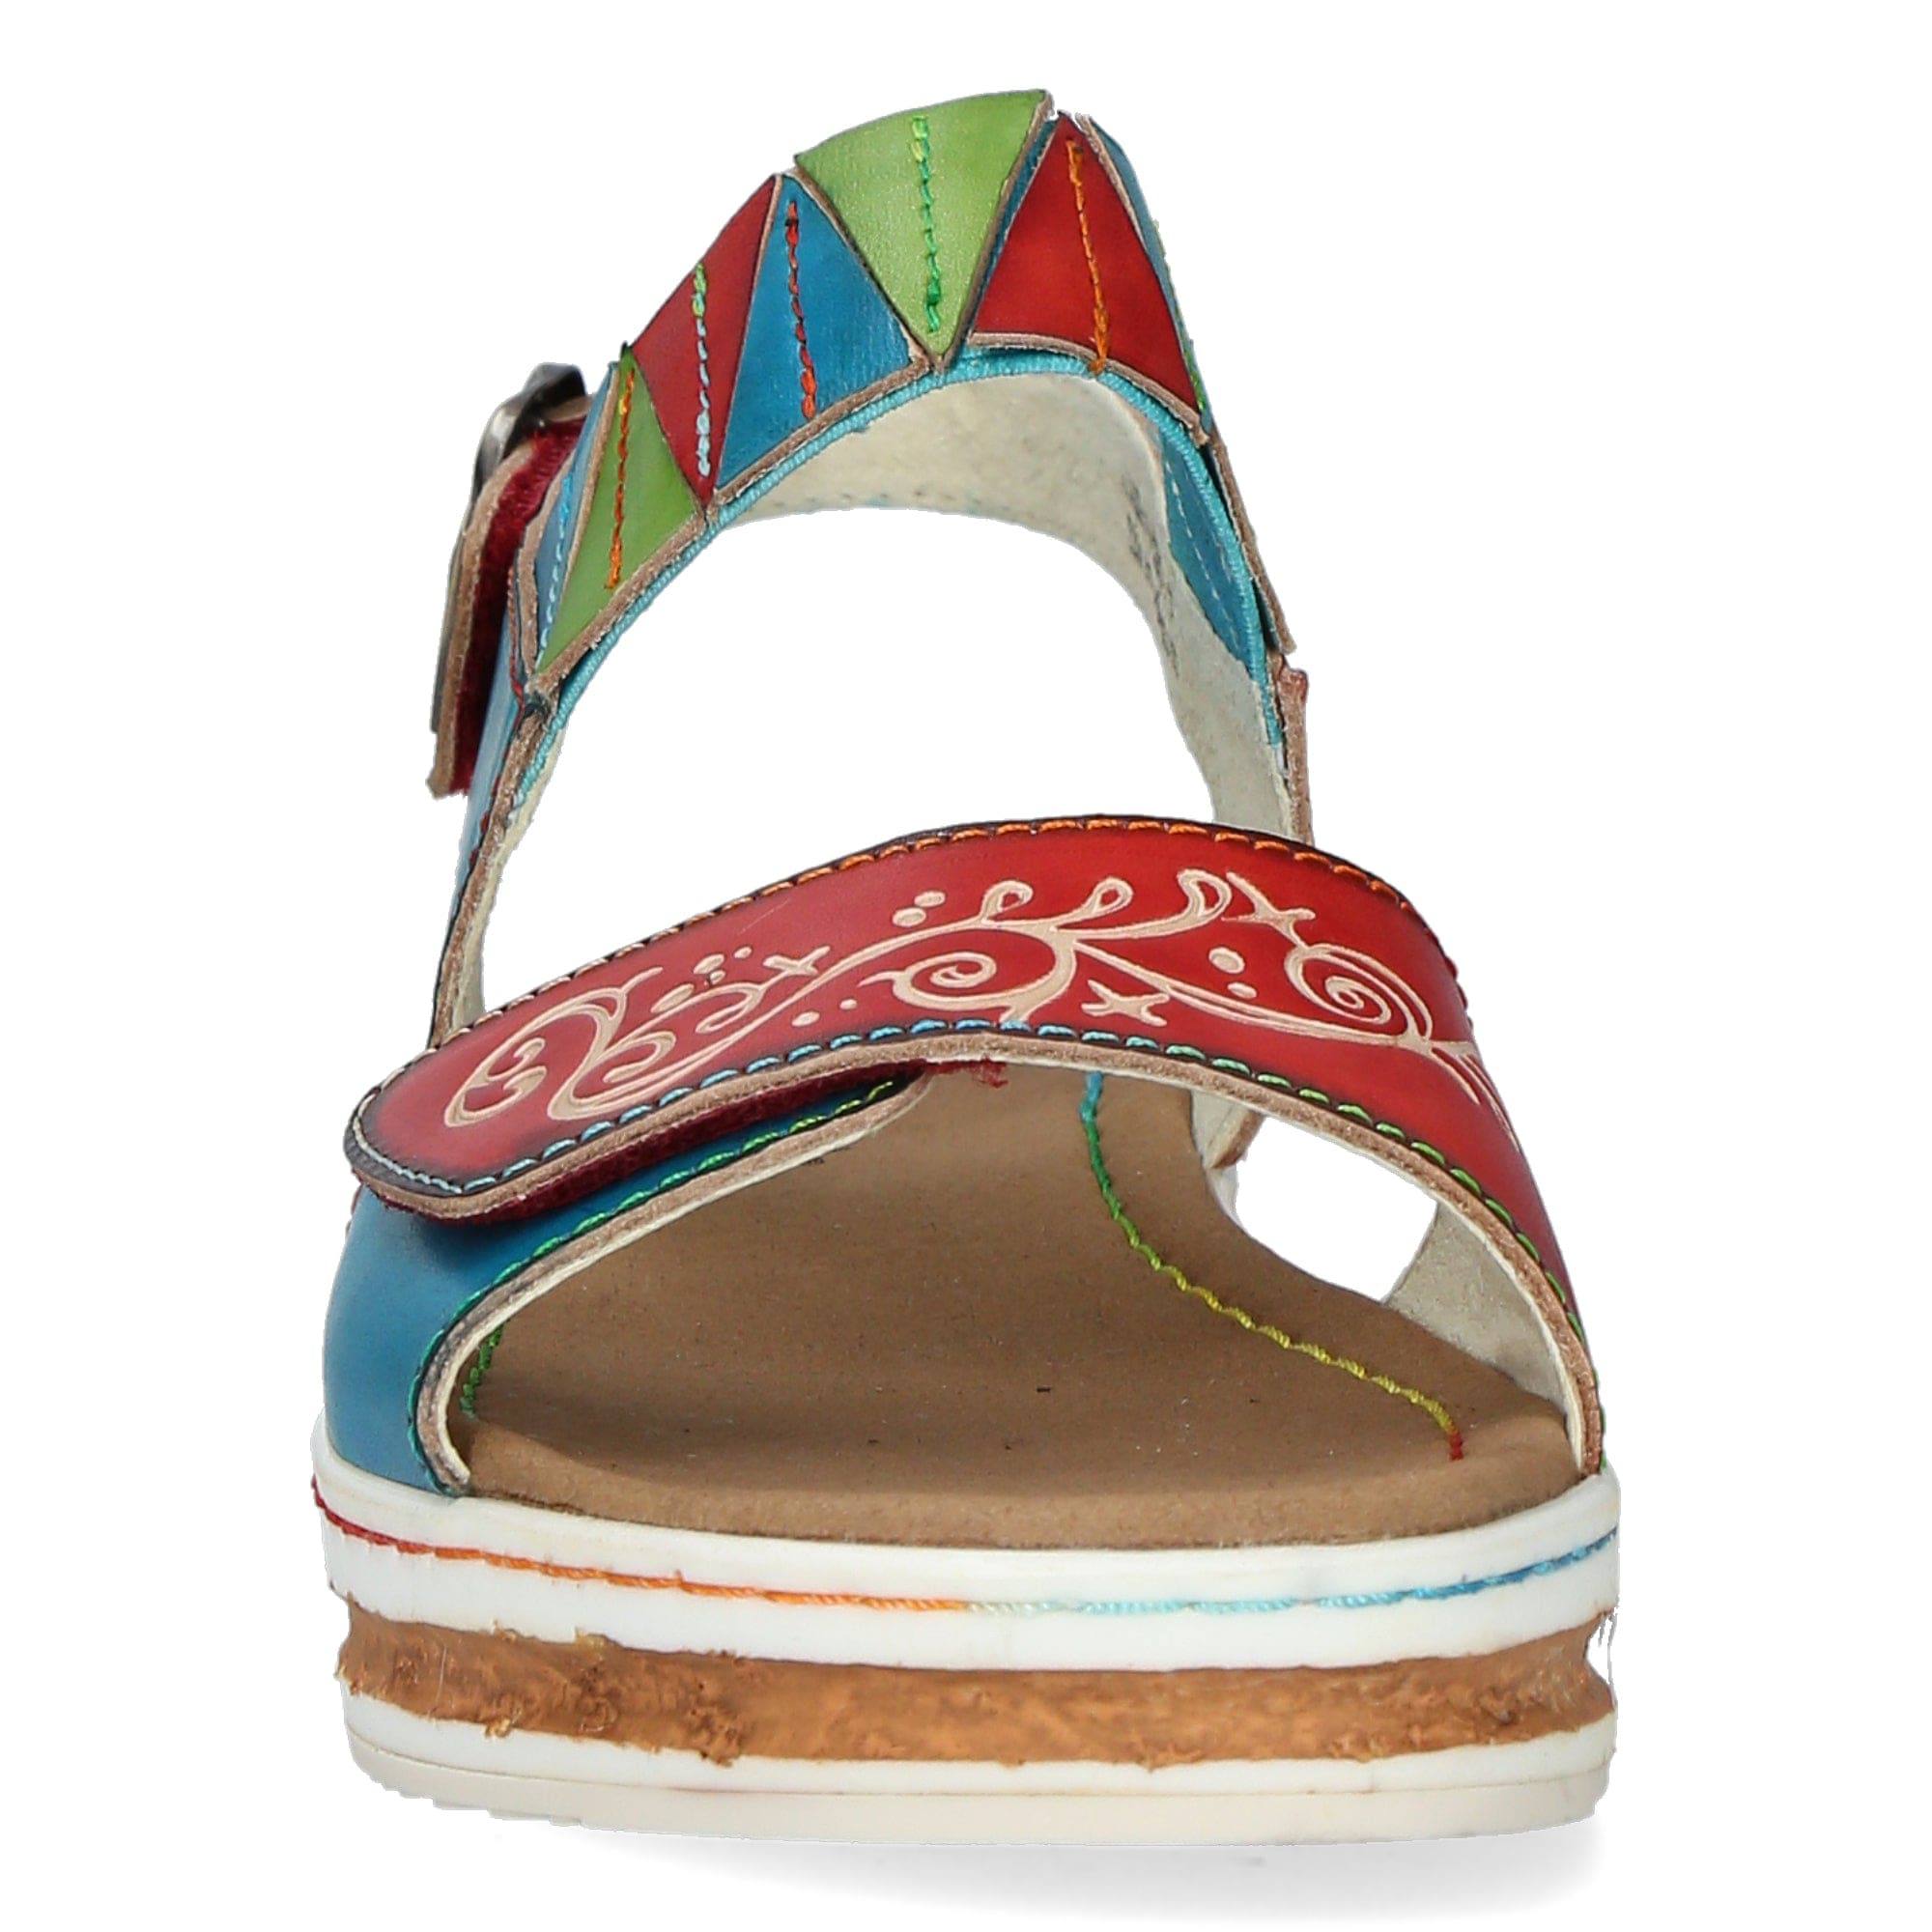 Chaussure DICEZEO 05 - Sandale